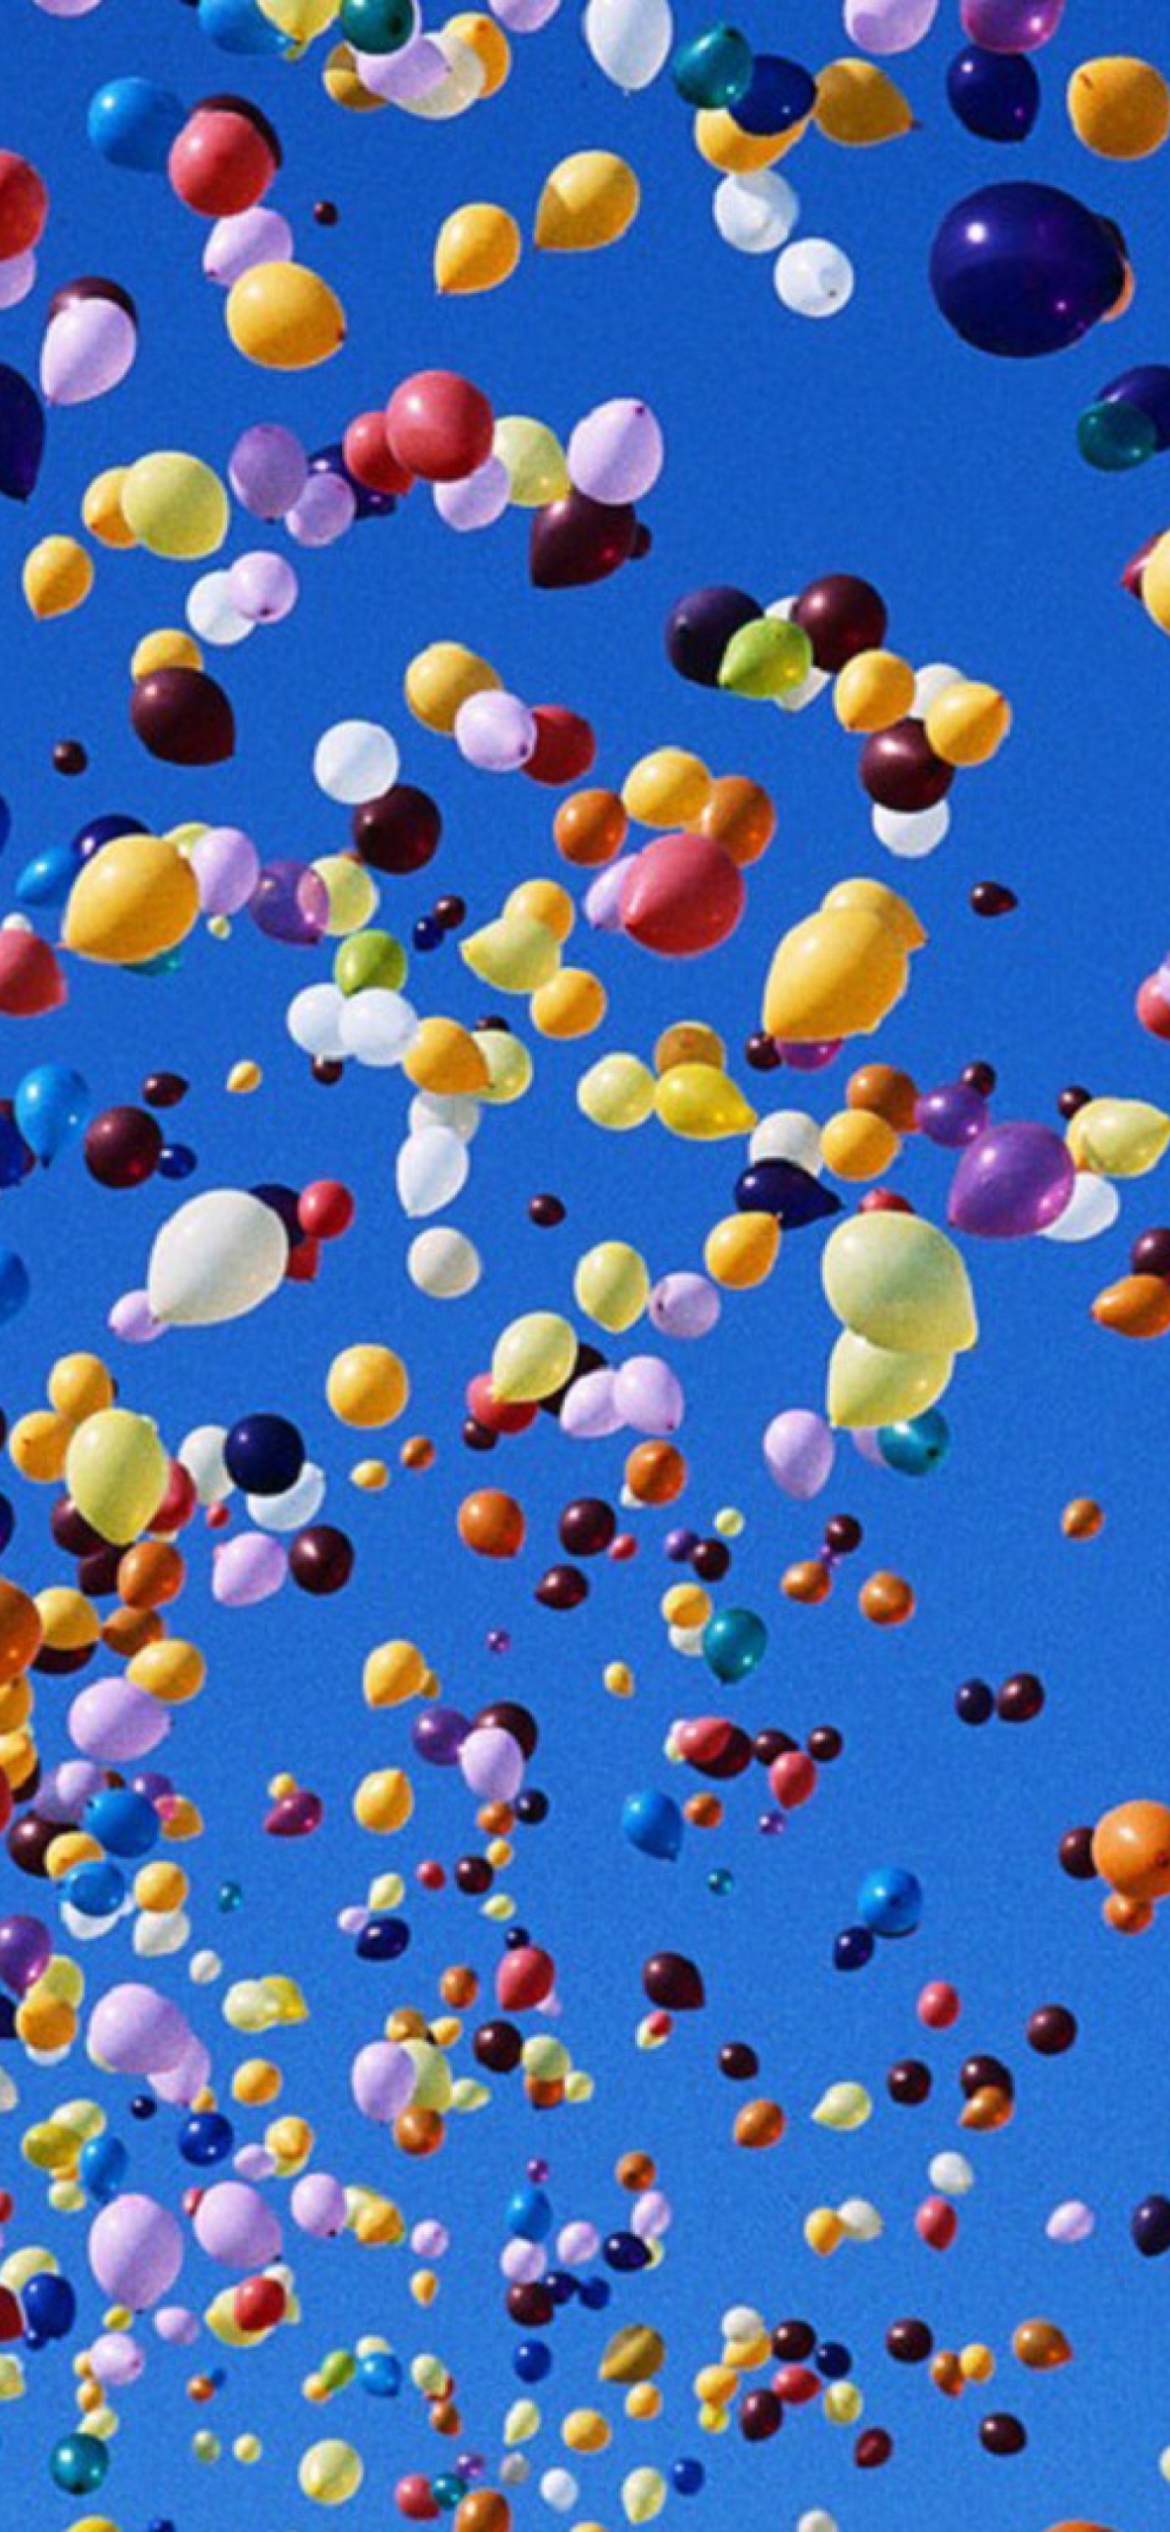 Das Colorful Balloons In Blue Sky Wallpaper 1170x2532